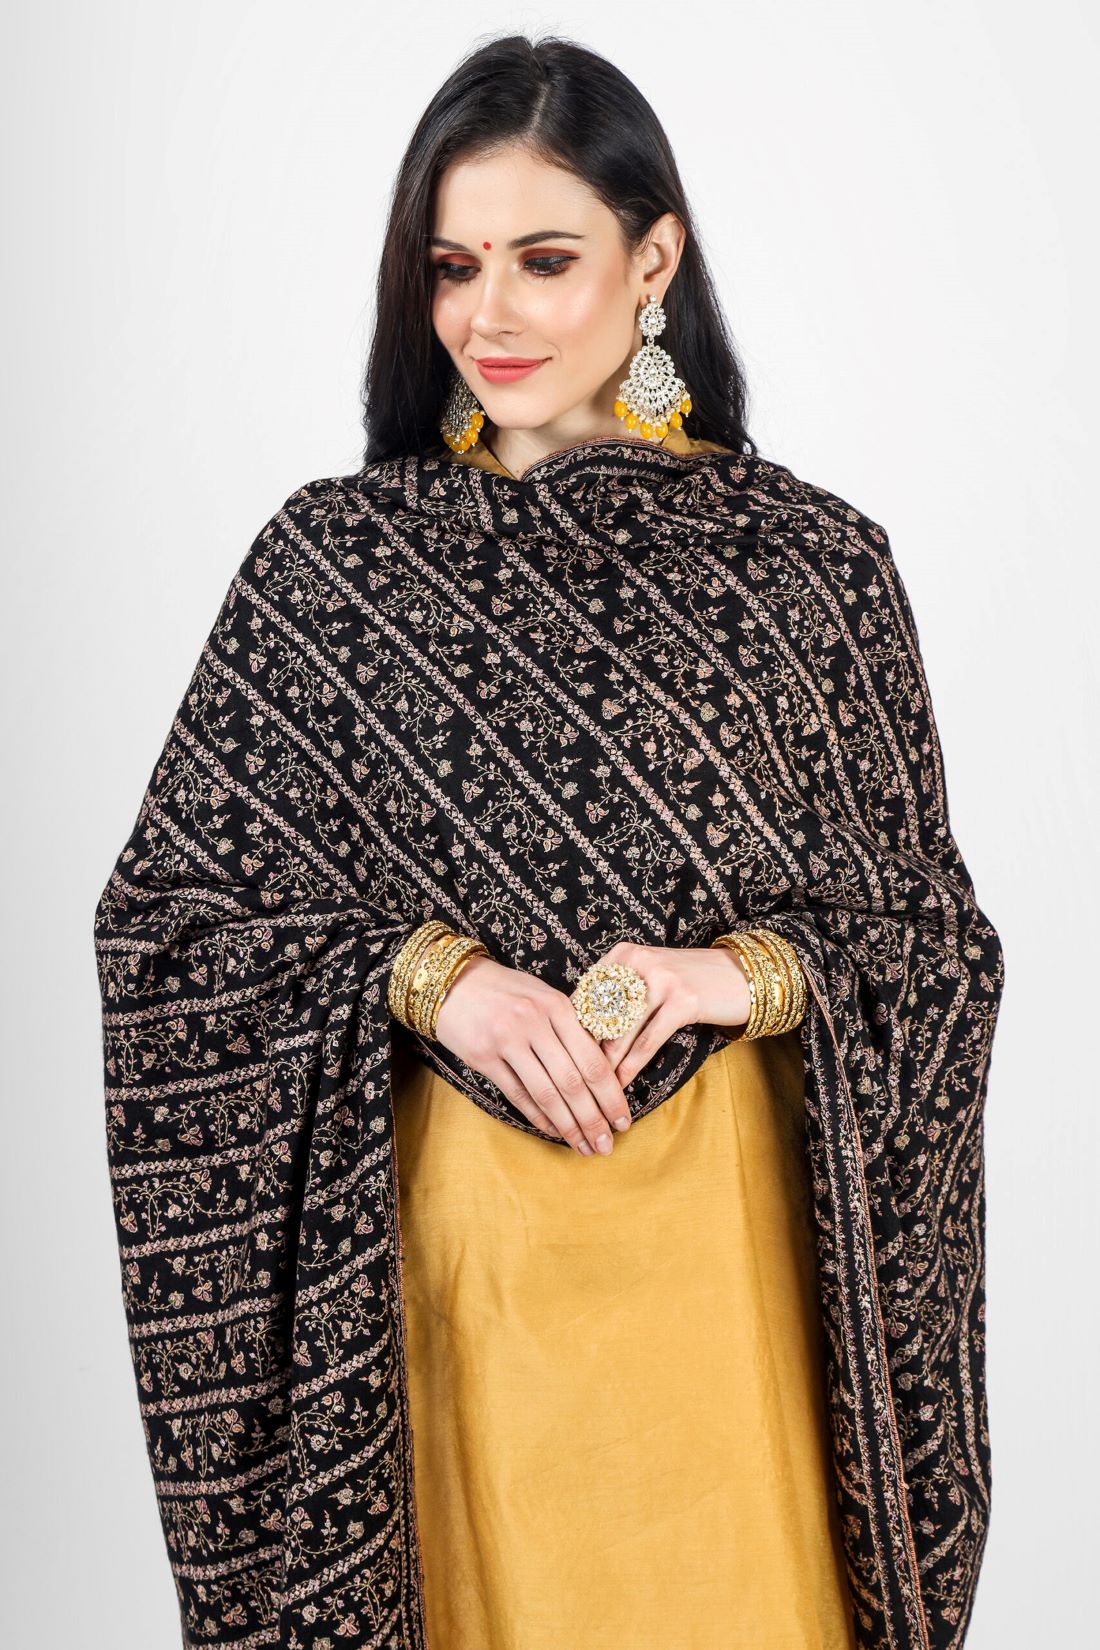 Stripped sozni  Jaldaar pashmina shawl